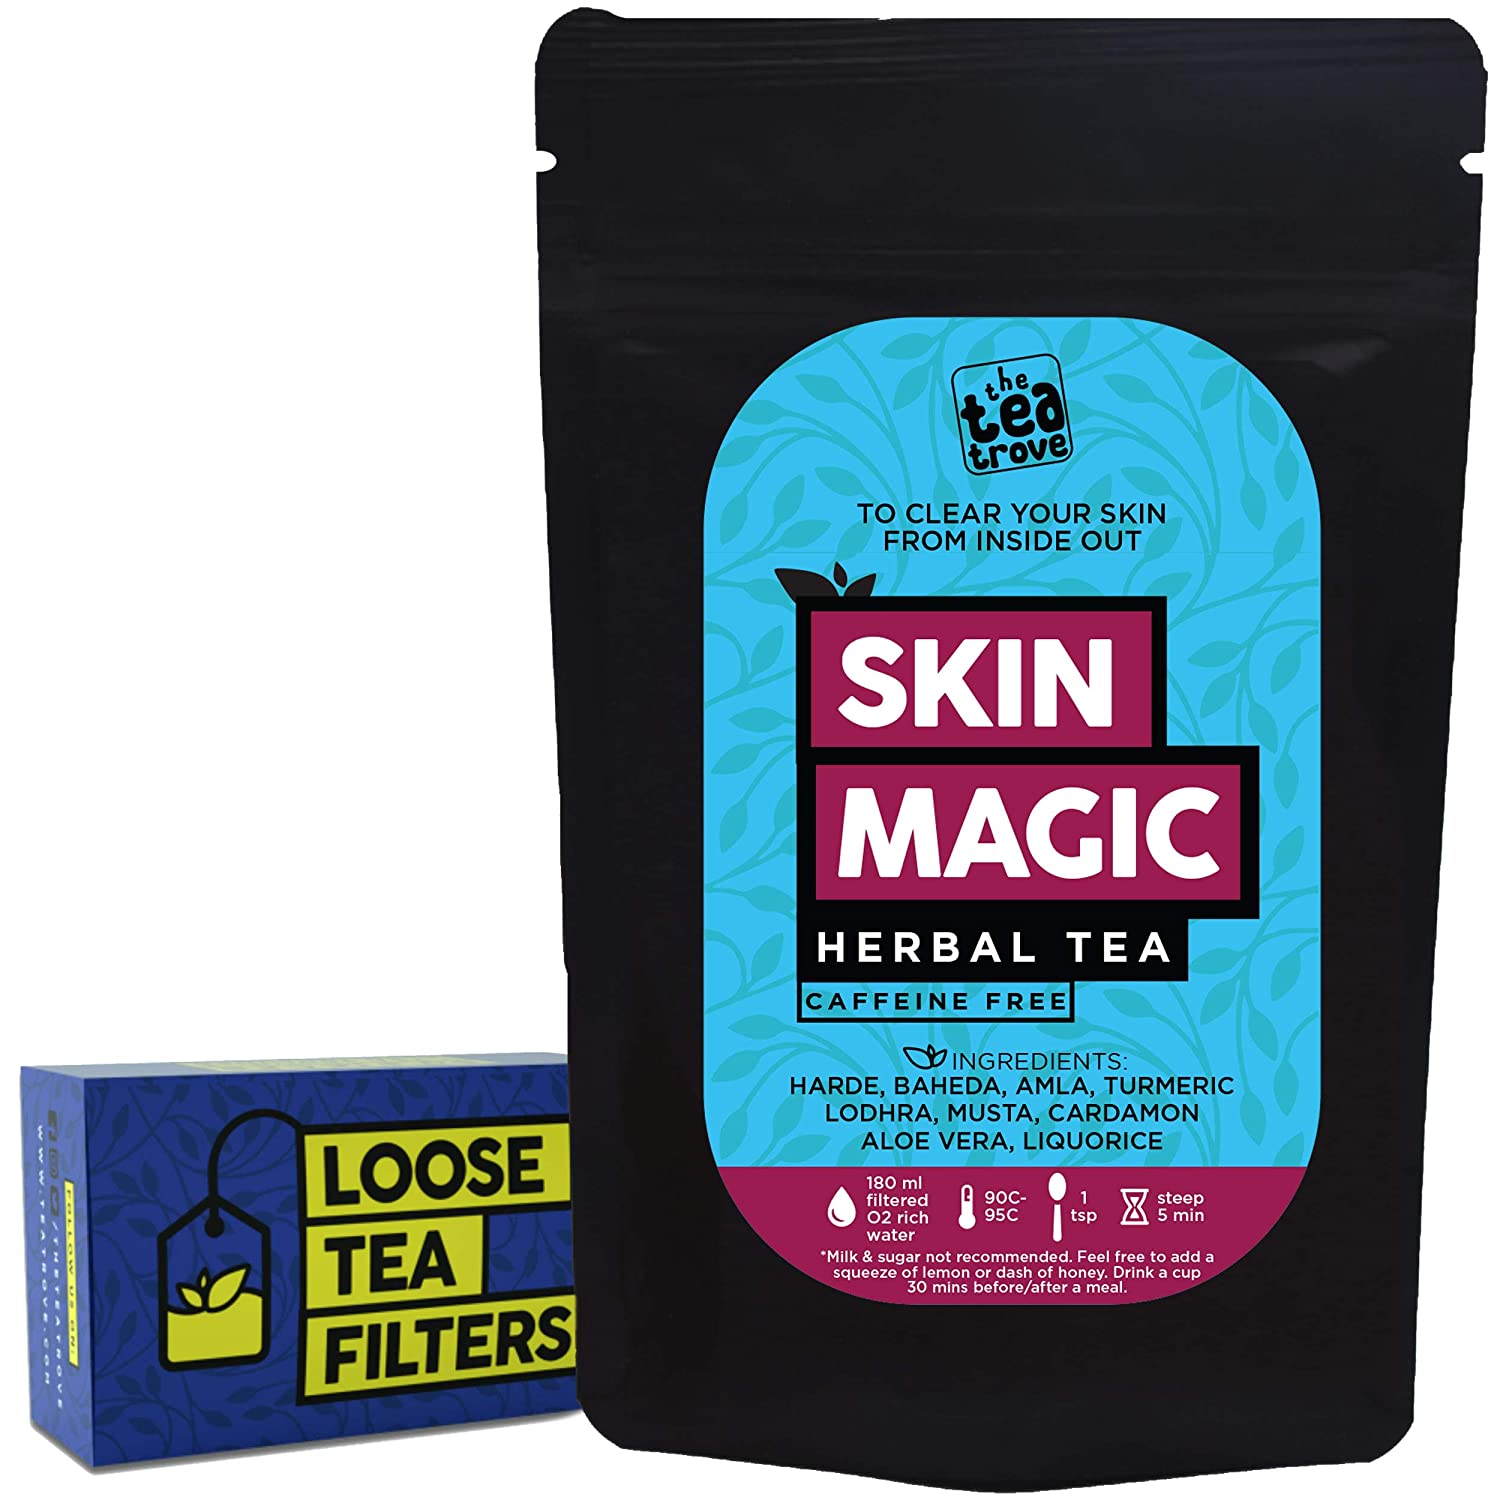 The Tea Trove Skin Magic Herbal Tea With Loose Tea Filter Image